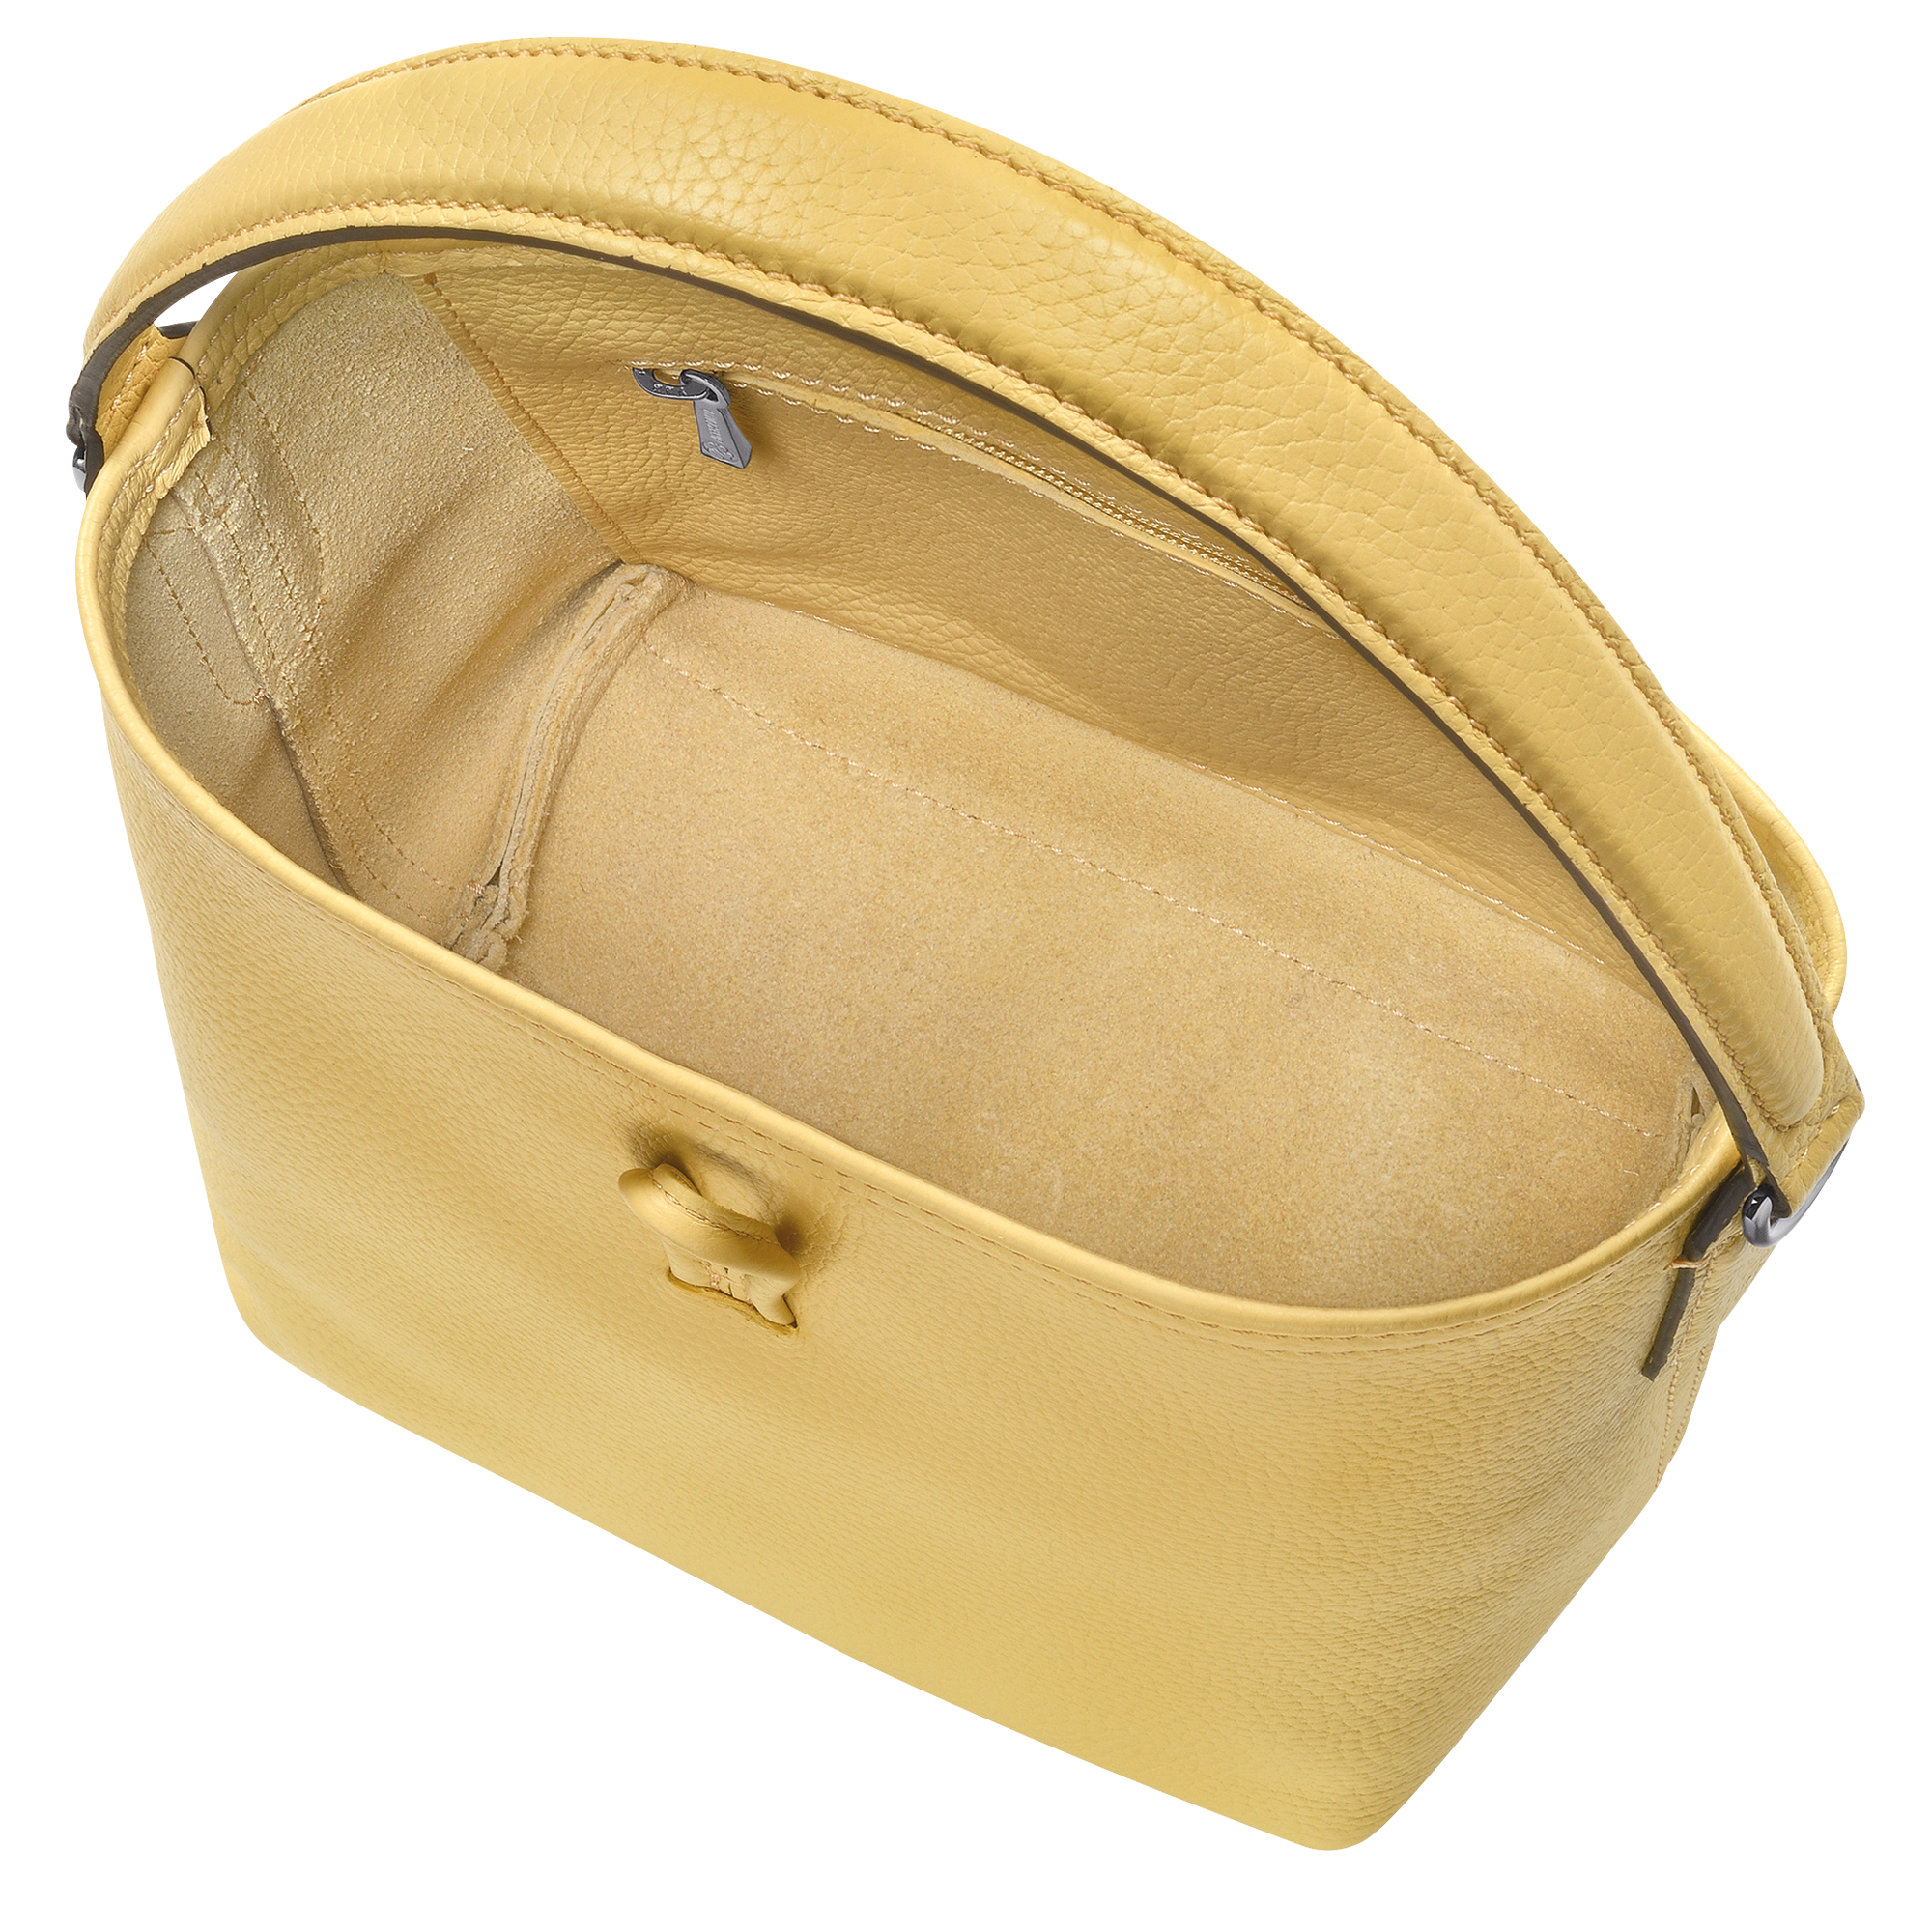 Roseau Essential XS Bucket bag Wheat - Leather (10159968A81)